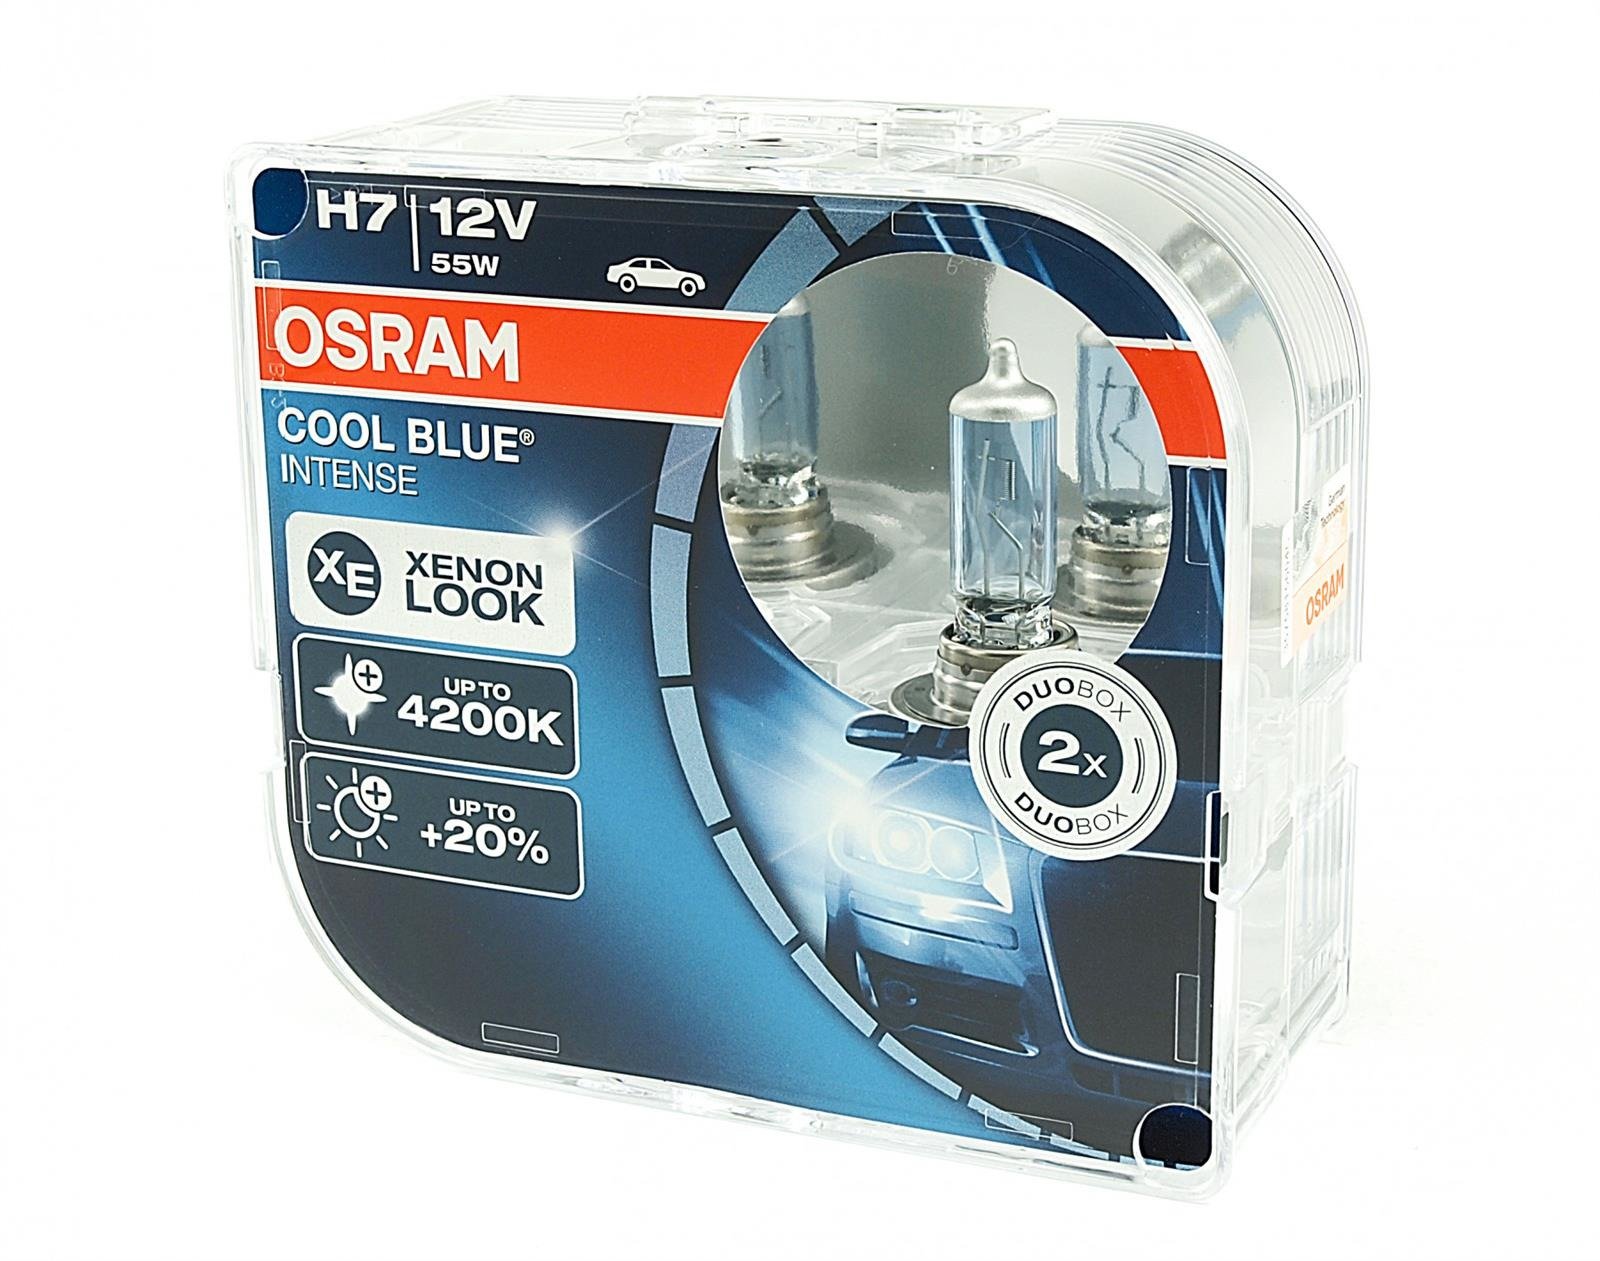 H7 12V 55W PX26d Cool Blue INTENSE 2pcs Osram